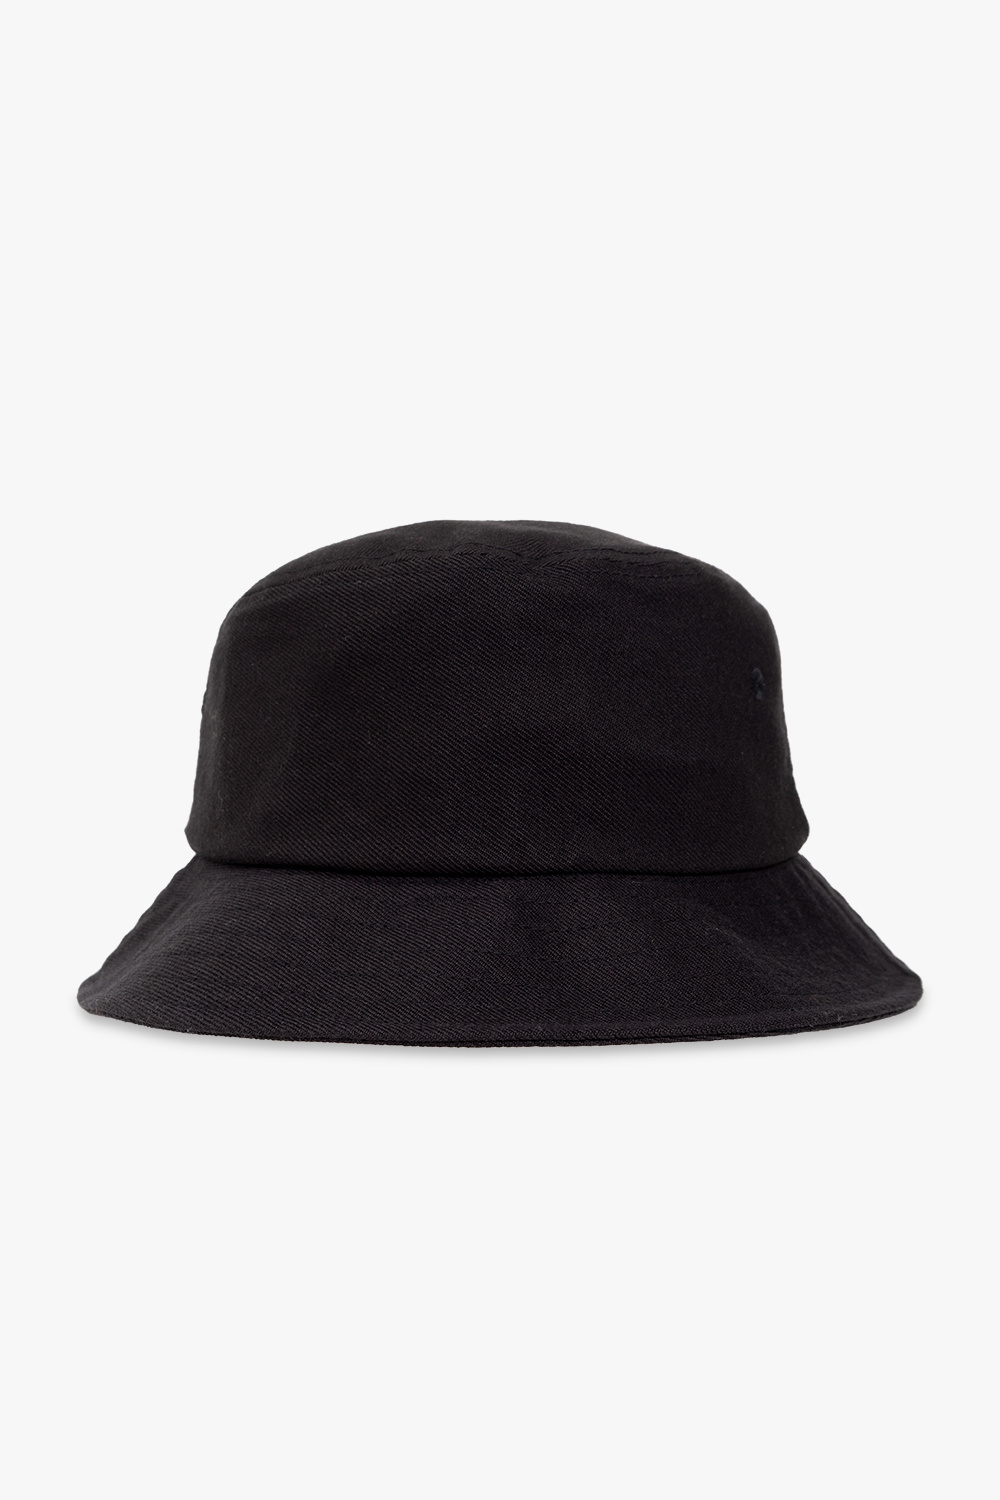 Stussy Chocolate Beanie Hat